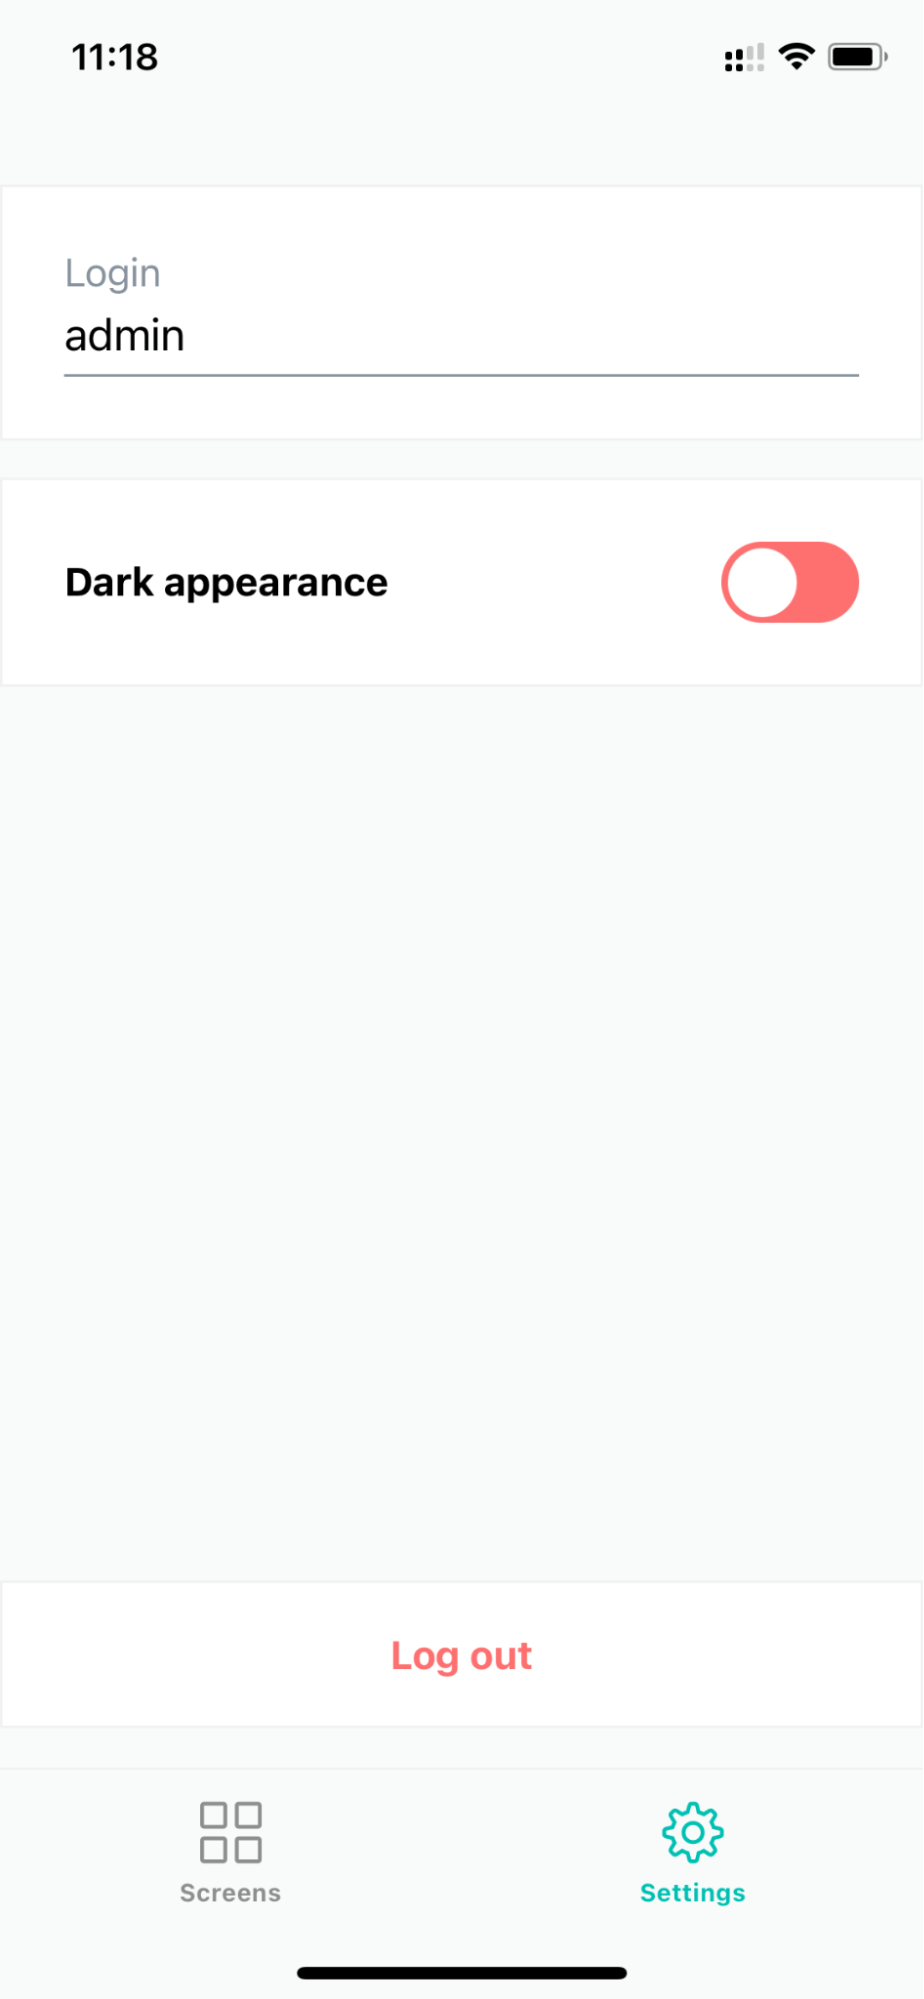 Dark appearance off